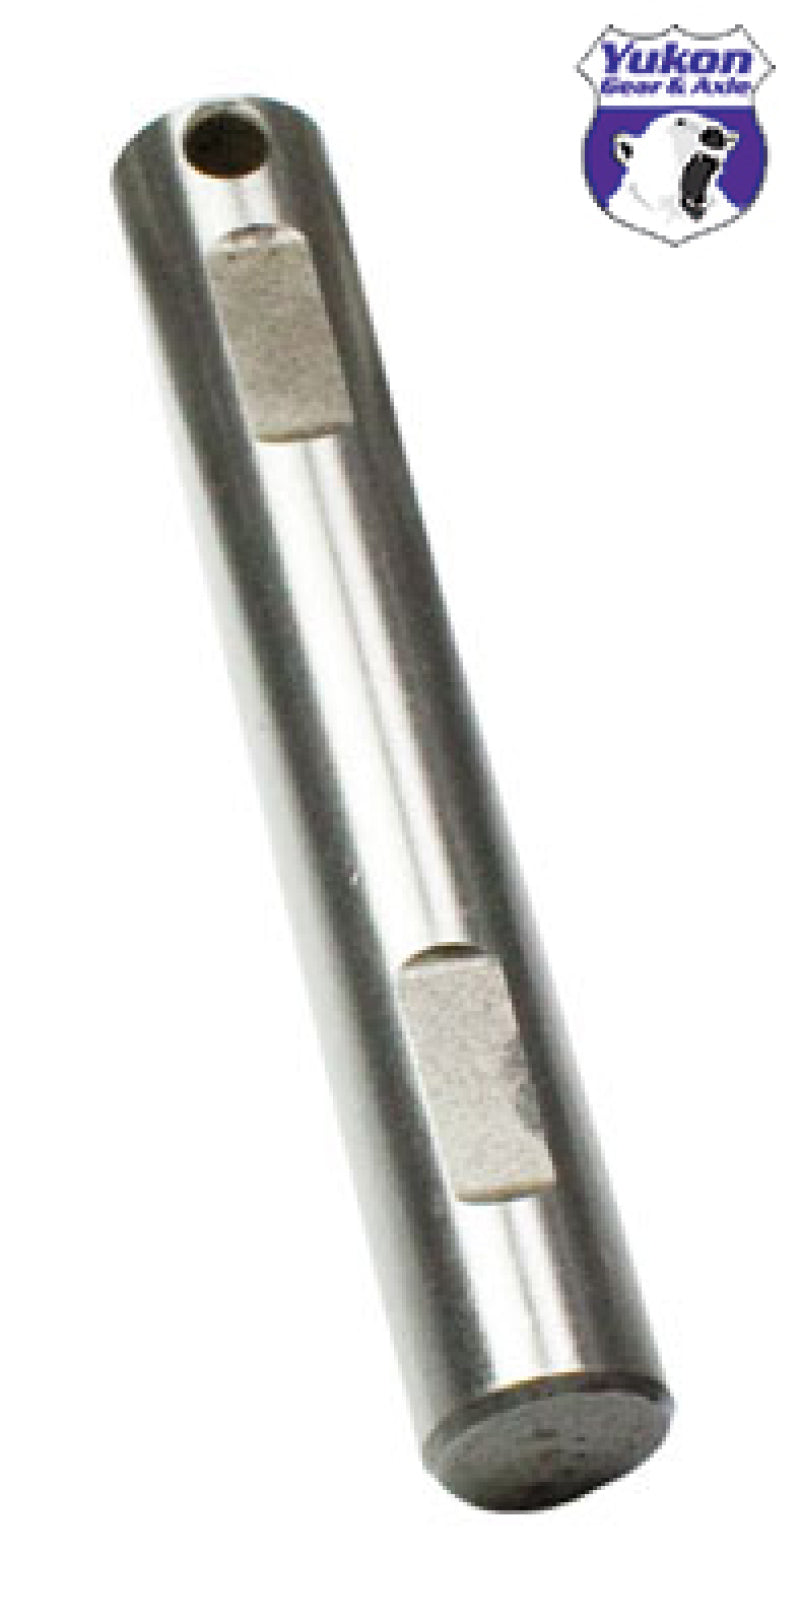 USA Standard Spartan Locker Model 20 Spartan Locker Cross Pin